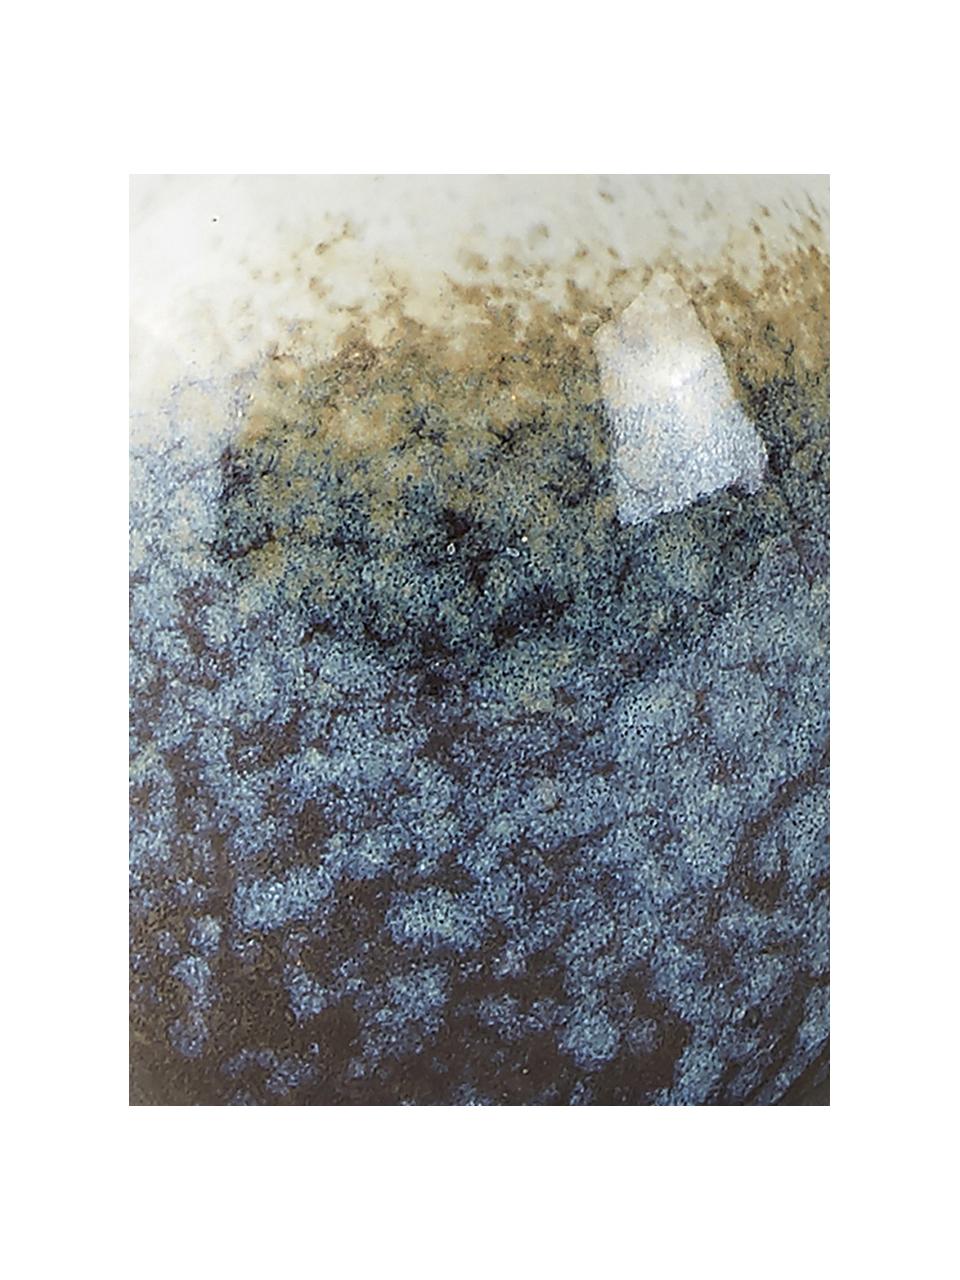 Diffusore Sea Salt (cocco & sale marino), Contenitore: ceramica, Tonalità blu, bianco, Ø 7 x Alt. 10 cm